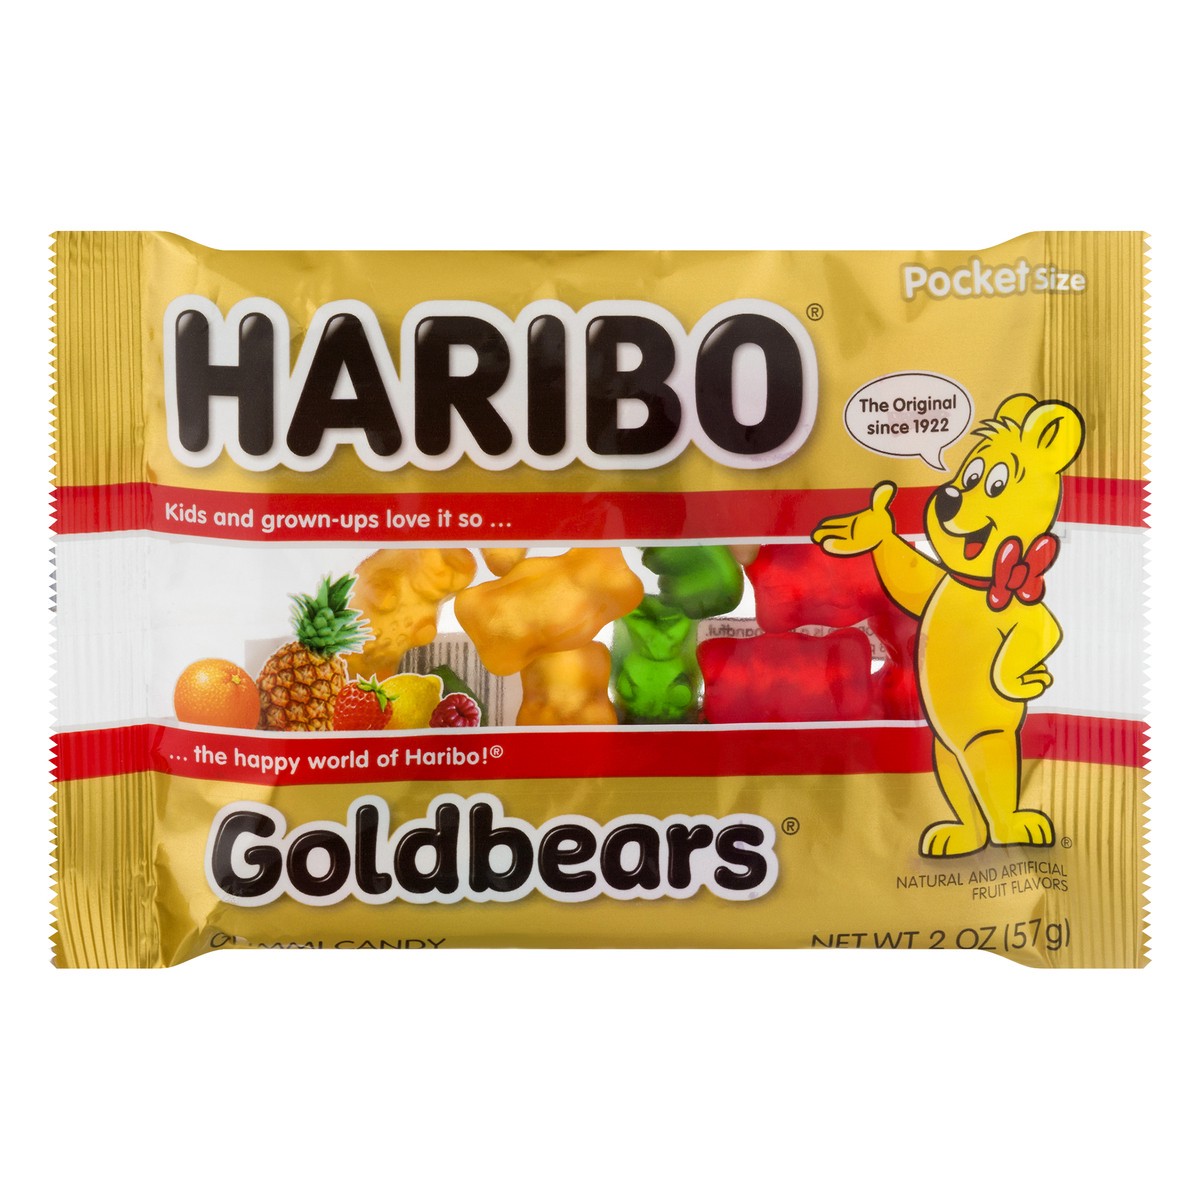 slide 2 of 13, Haribo Goldbears Pocket Size Gummi Candy 2 oz, 2 oz